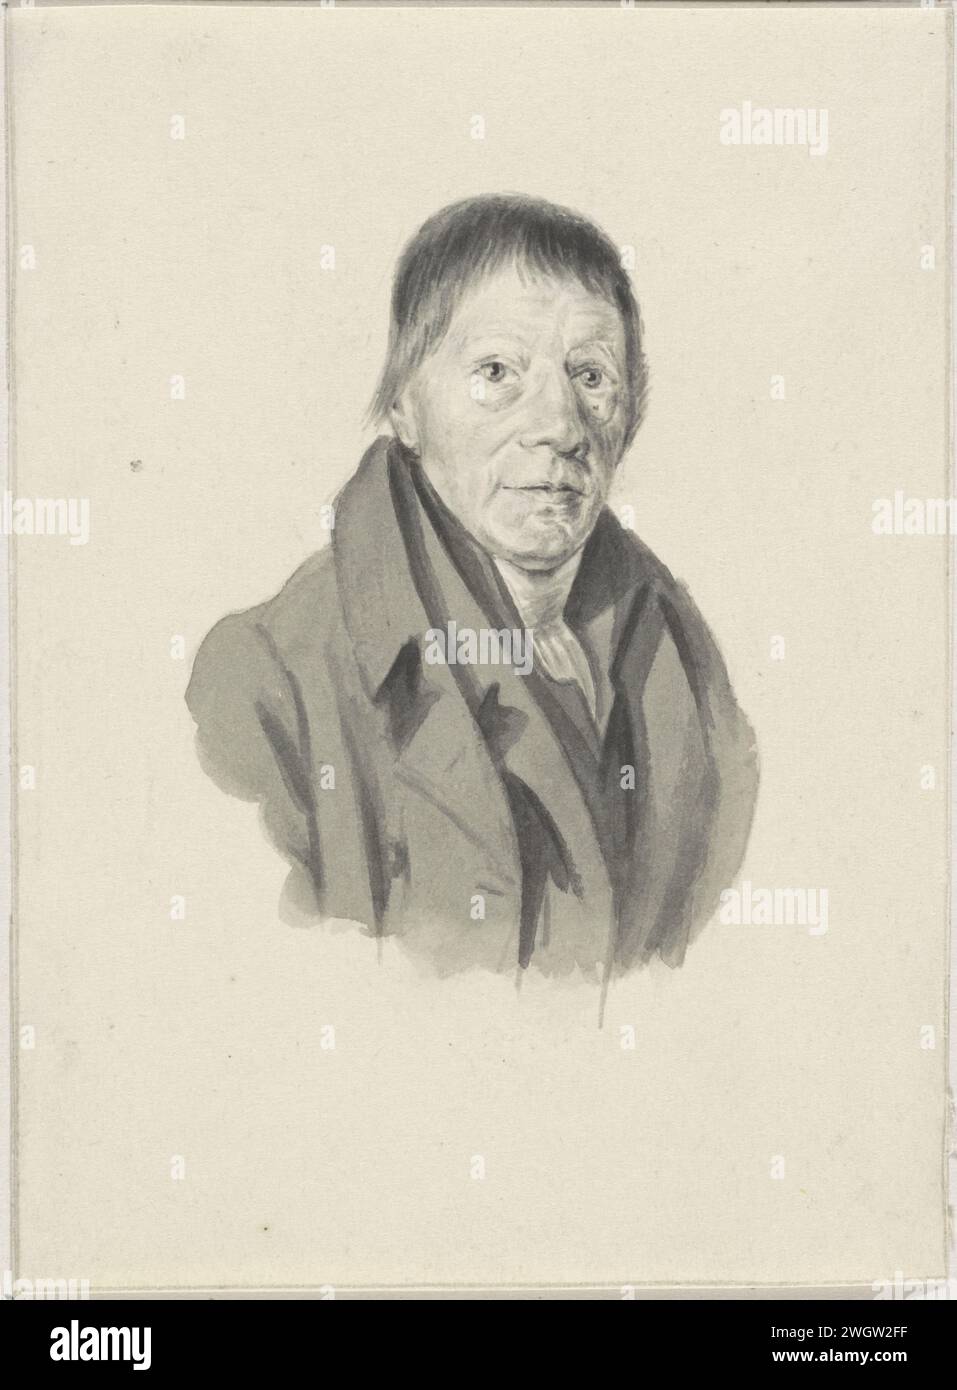 Portret van Herman Numan, Jan Simon Voddigel, after Caspari, 1830 - 1862 drawing   paper brush portrait, self-portrait of artist. historical persons Stock Photo